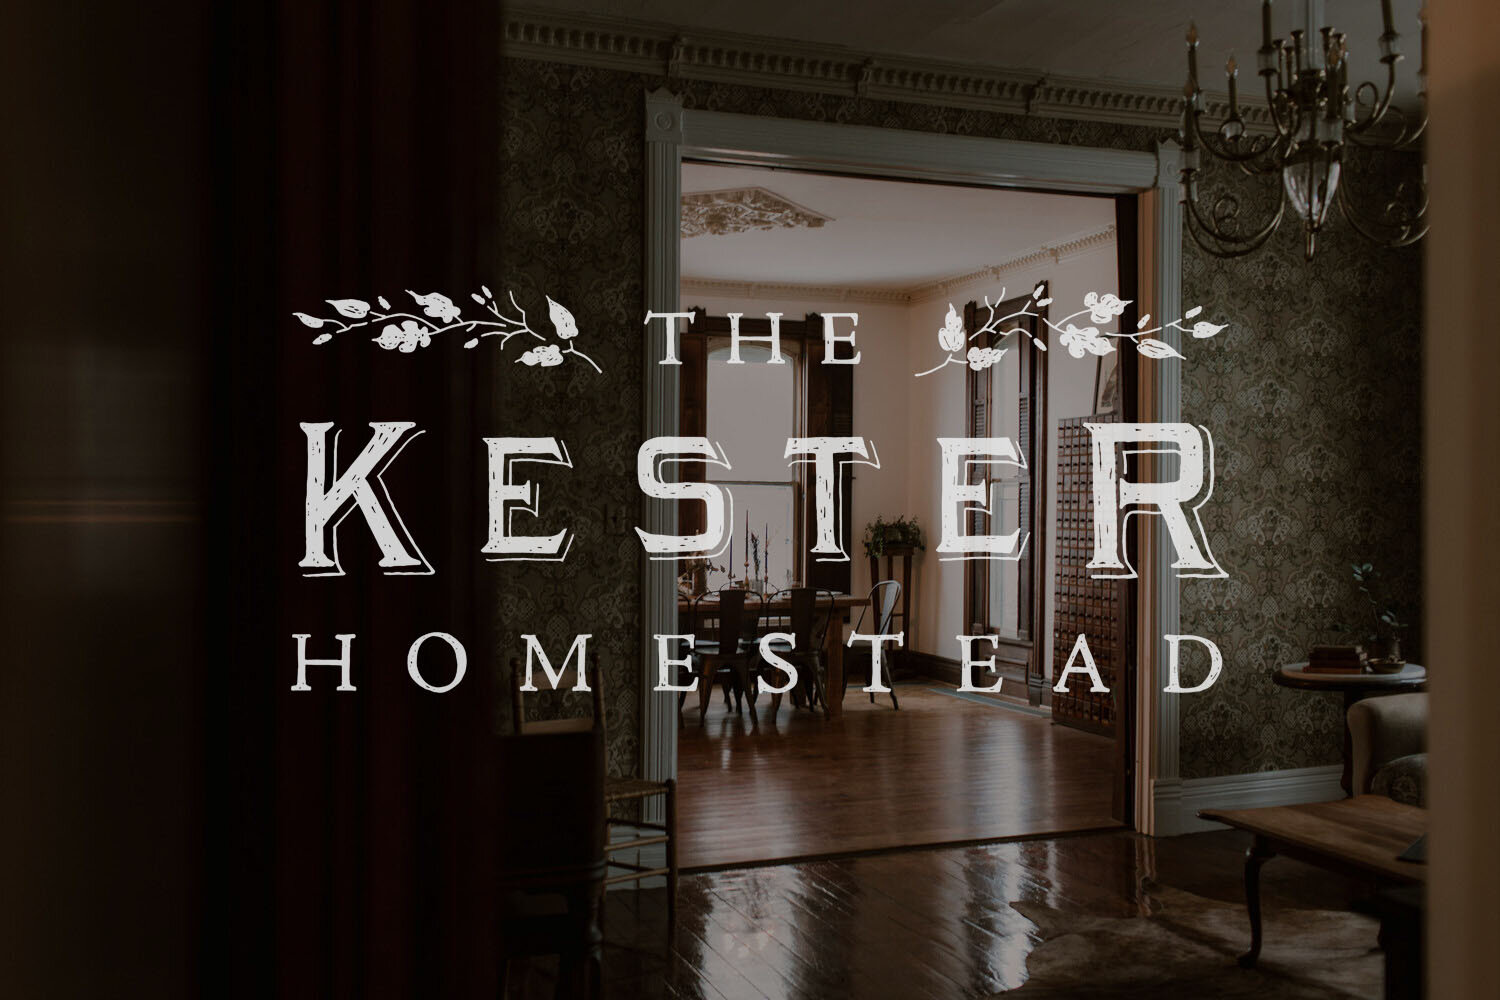 kester-homestead-logo-erinellis-photo-overlay-3.jpg